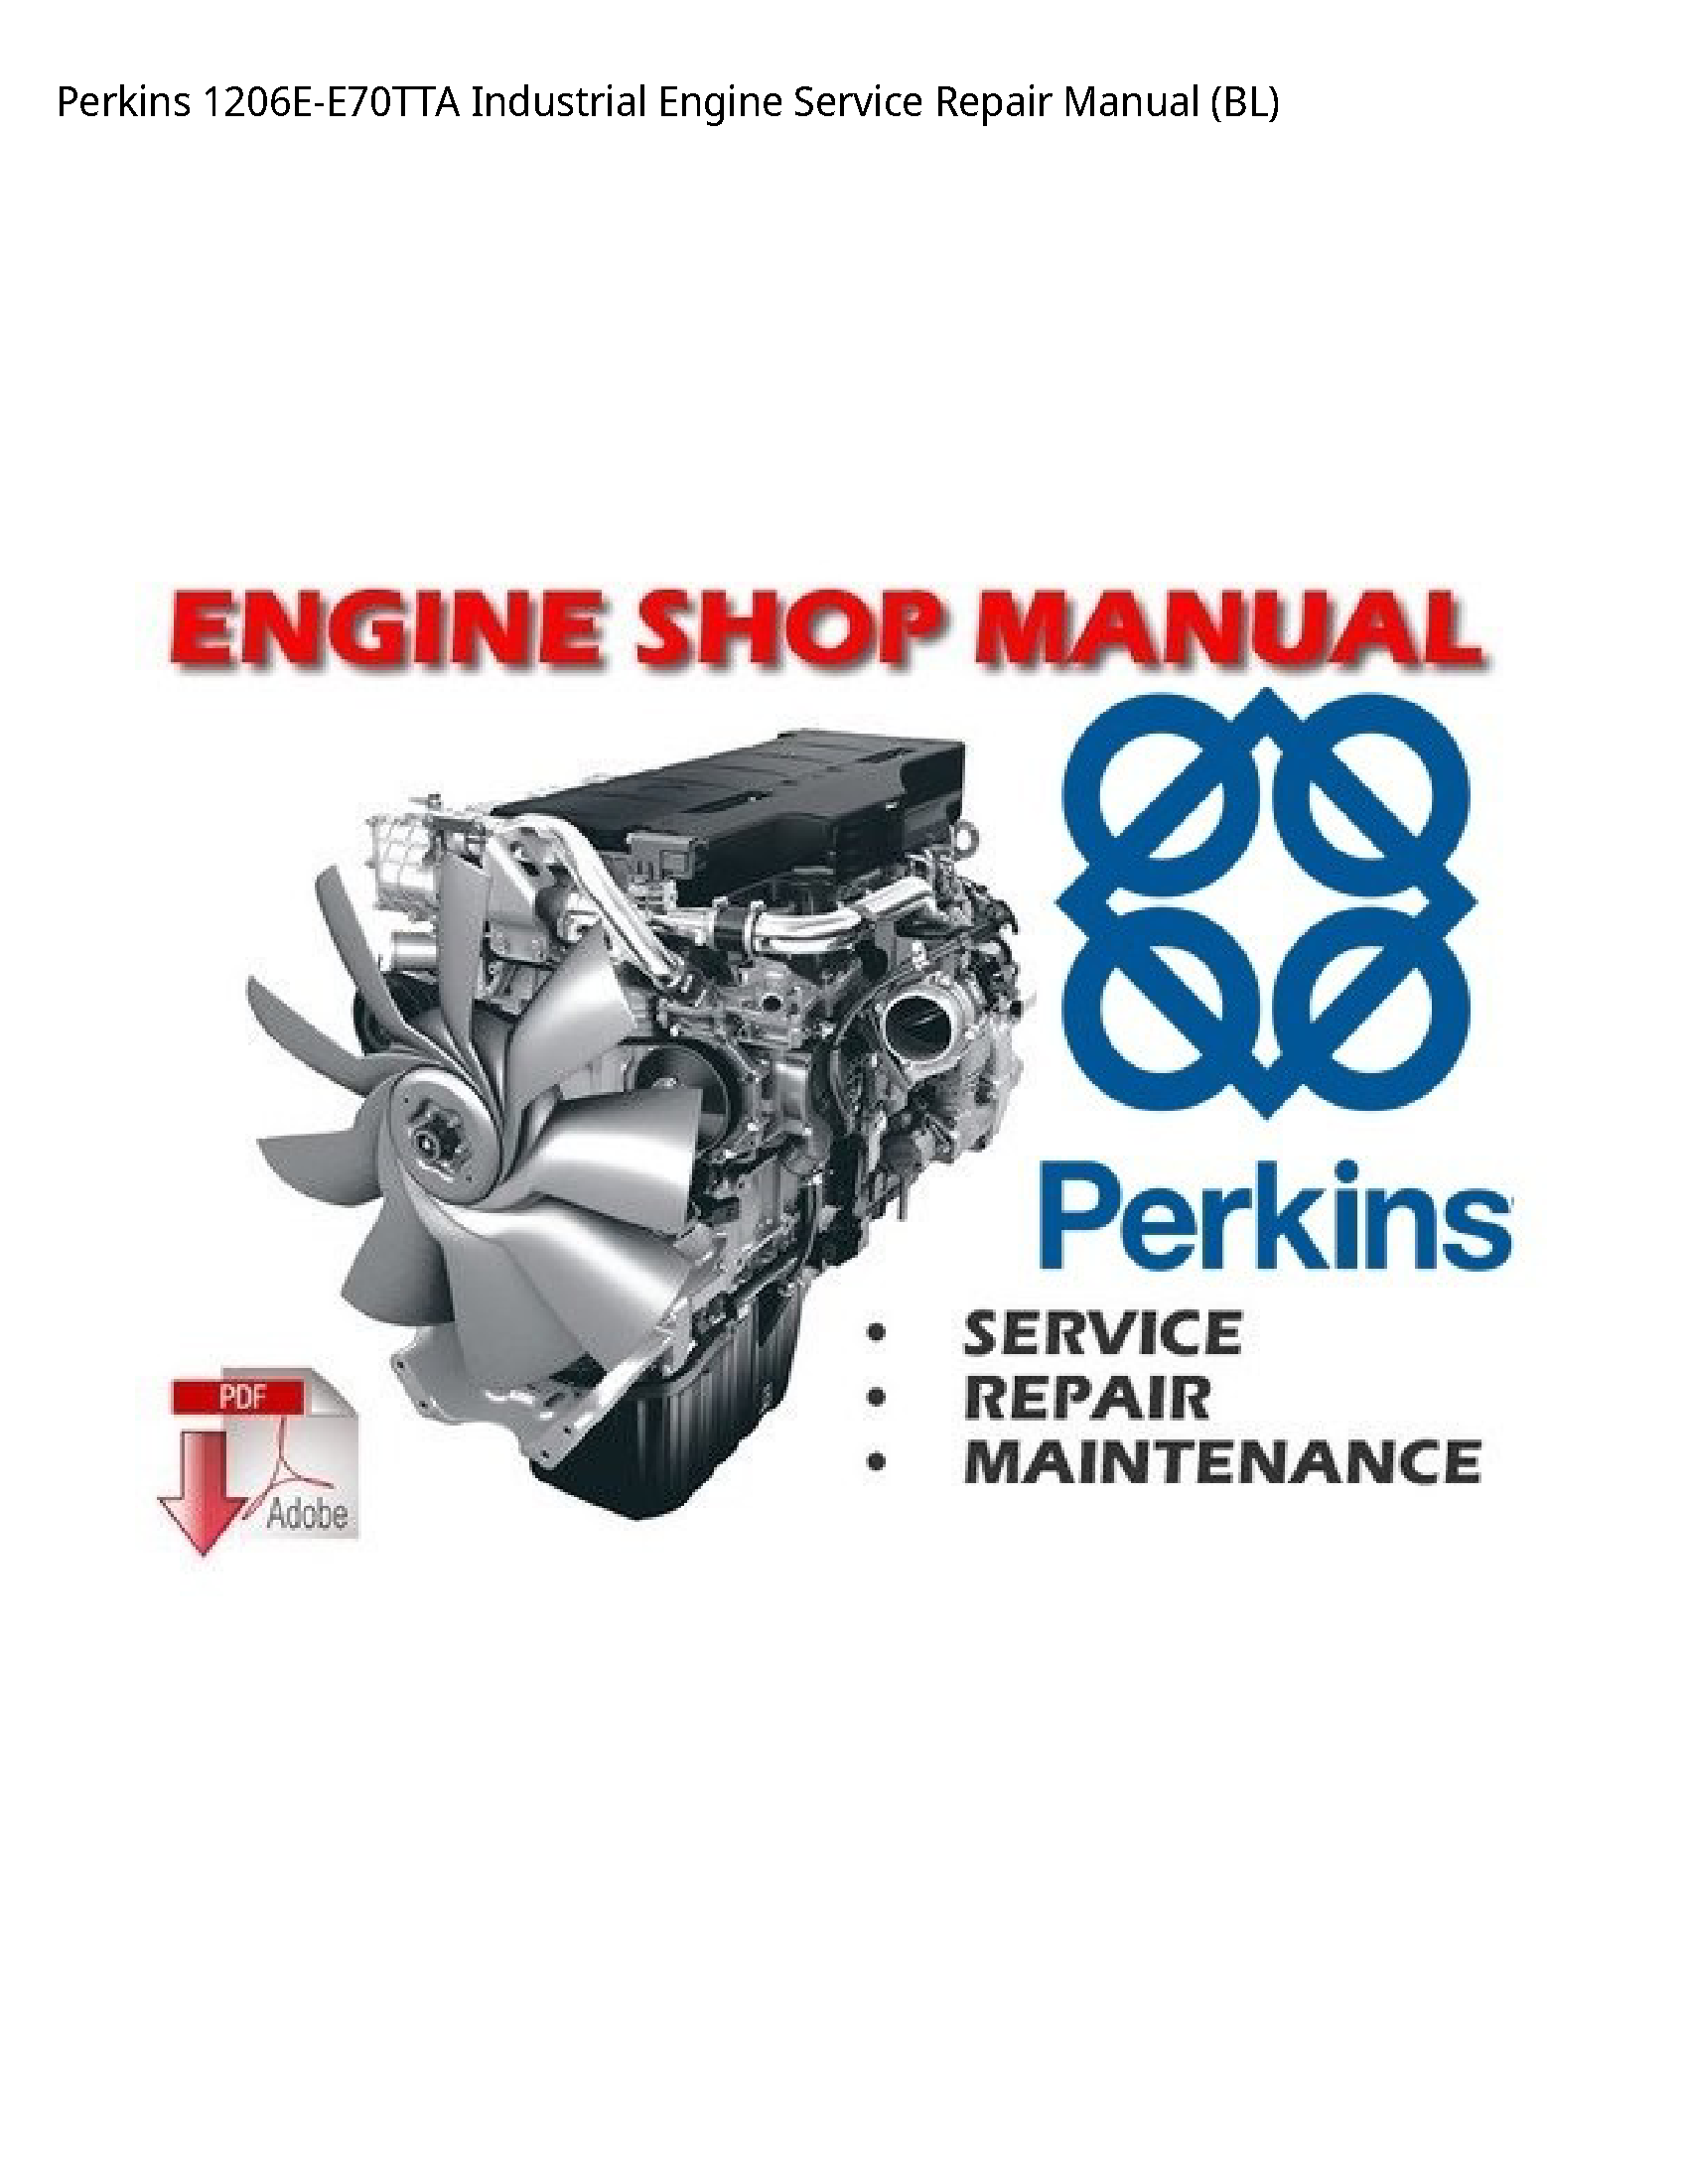 Perkins 1206E-E70TTA Industrial Engine manual